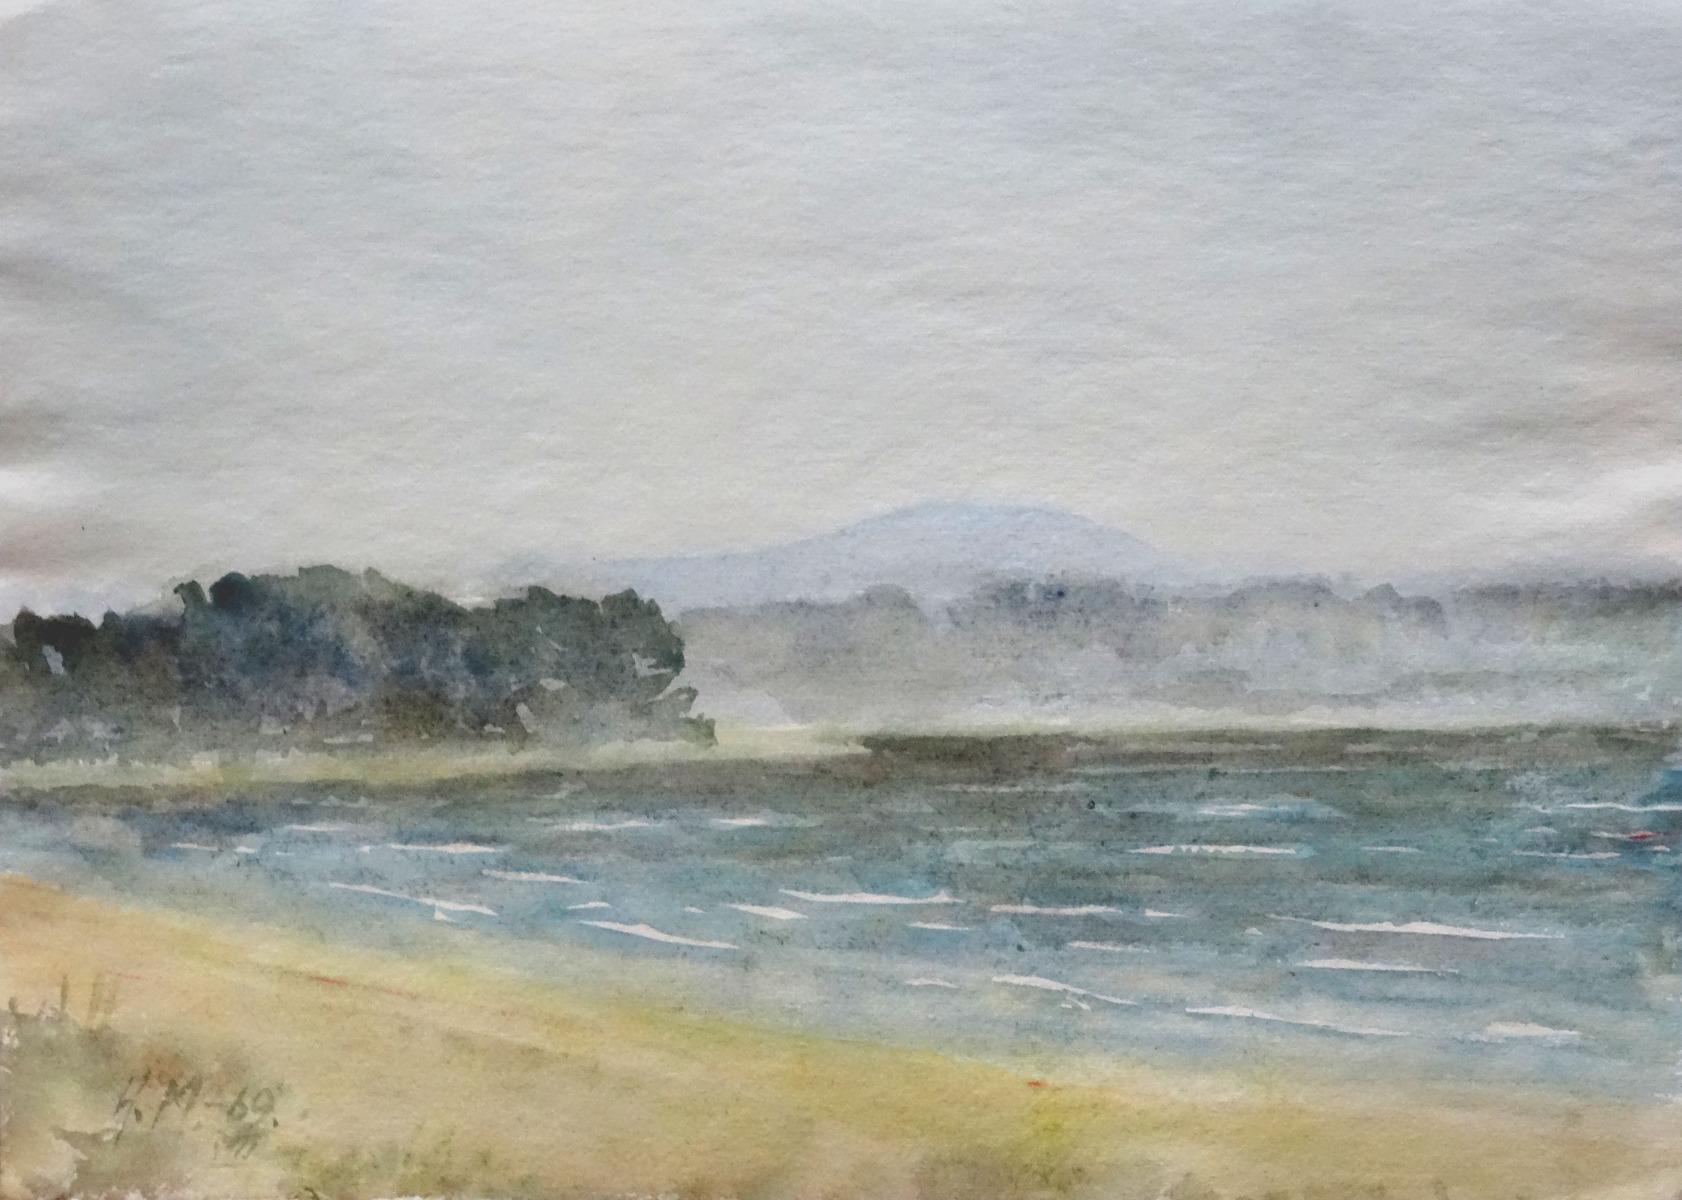 Herberts Mangolds Landscape Painting - The coast  1969, watercolor on paper, 20.5x28.5 cm